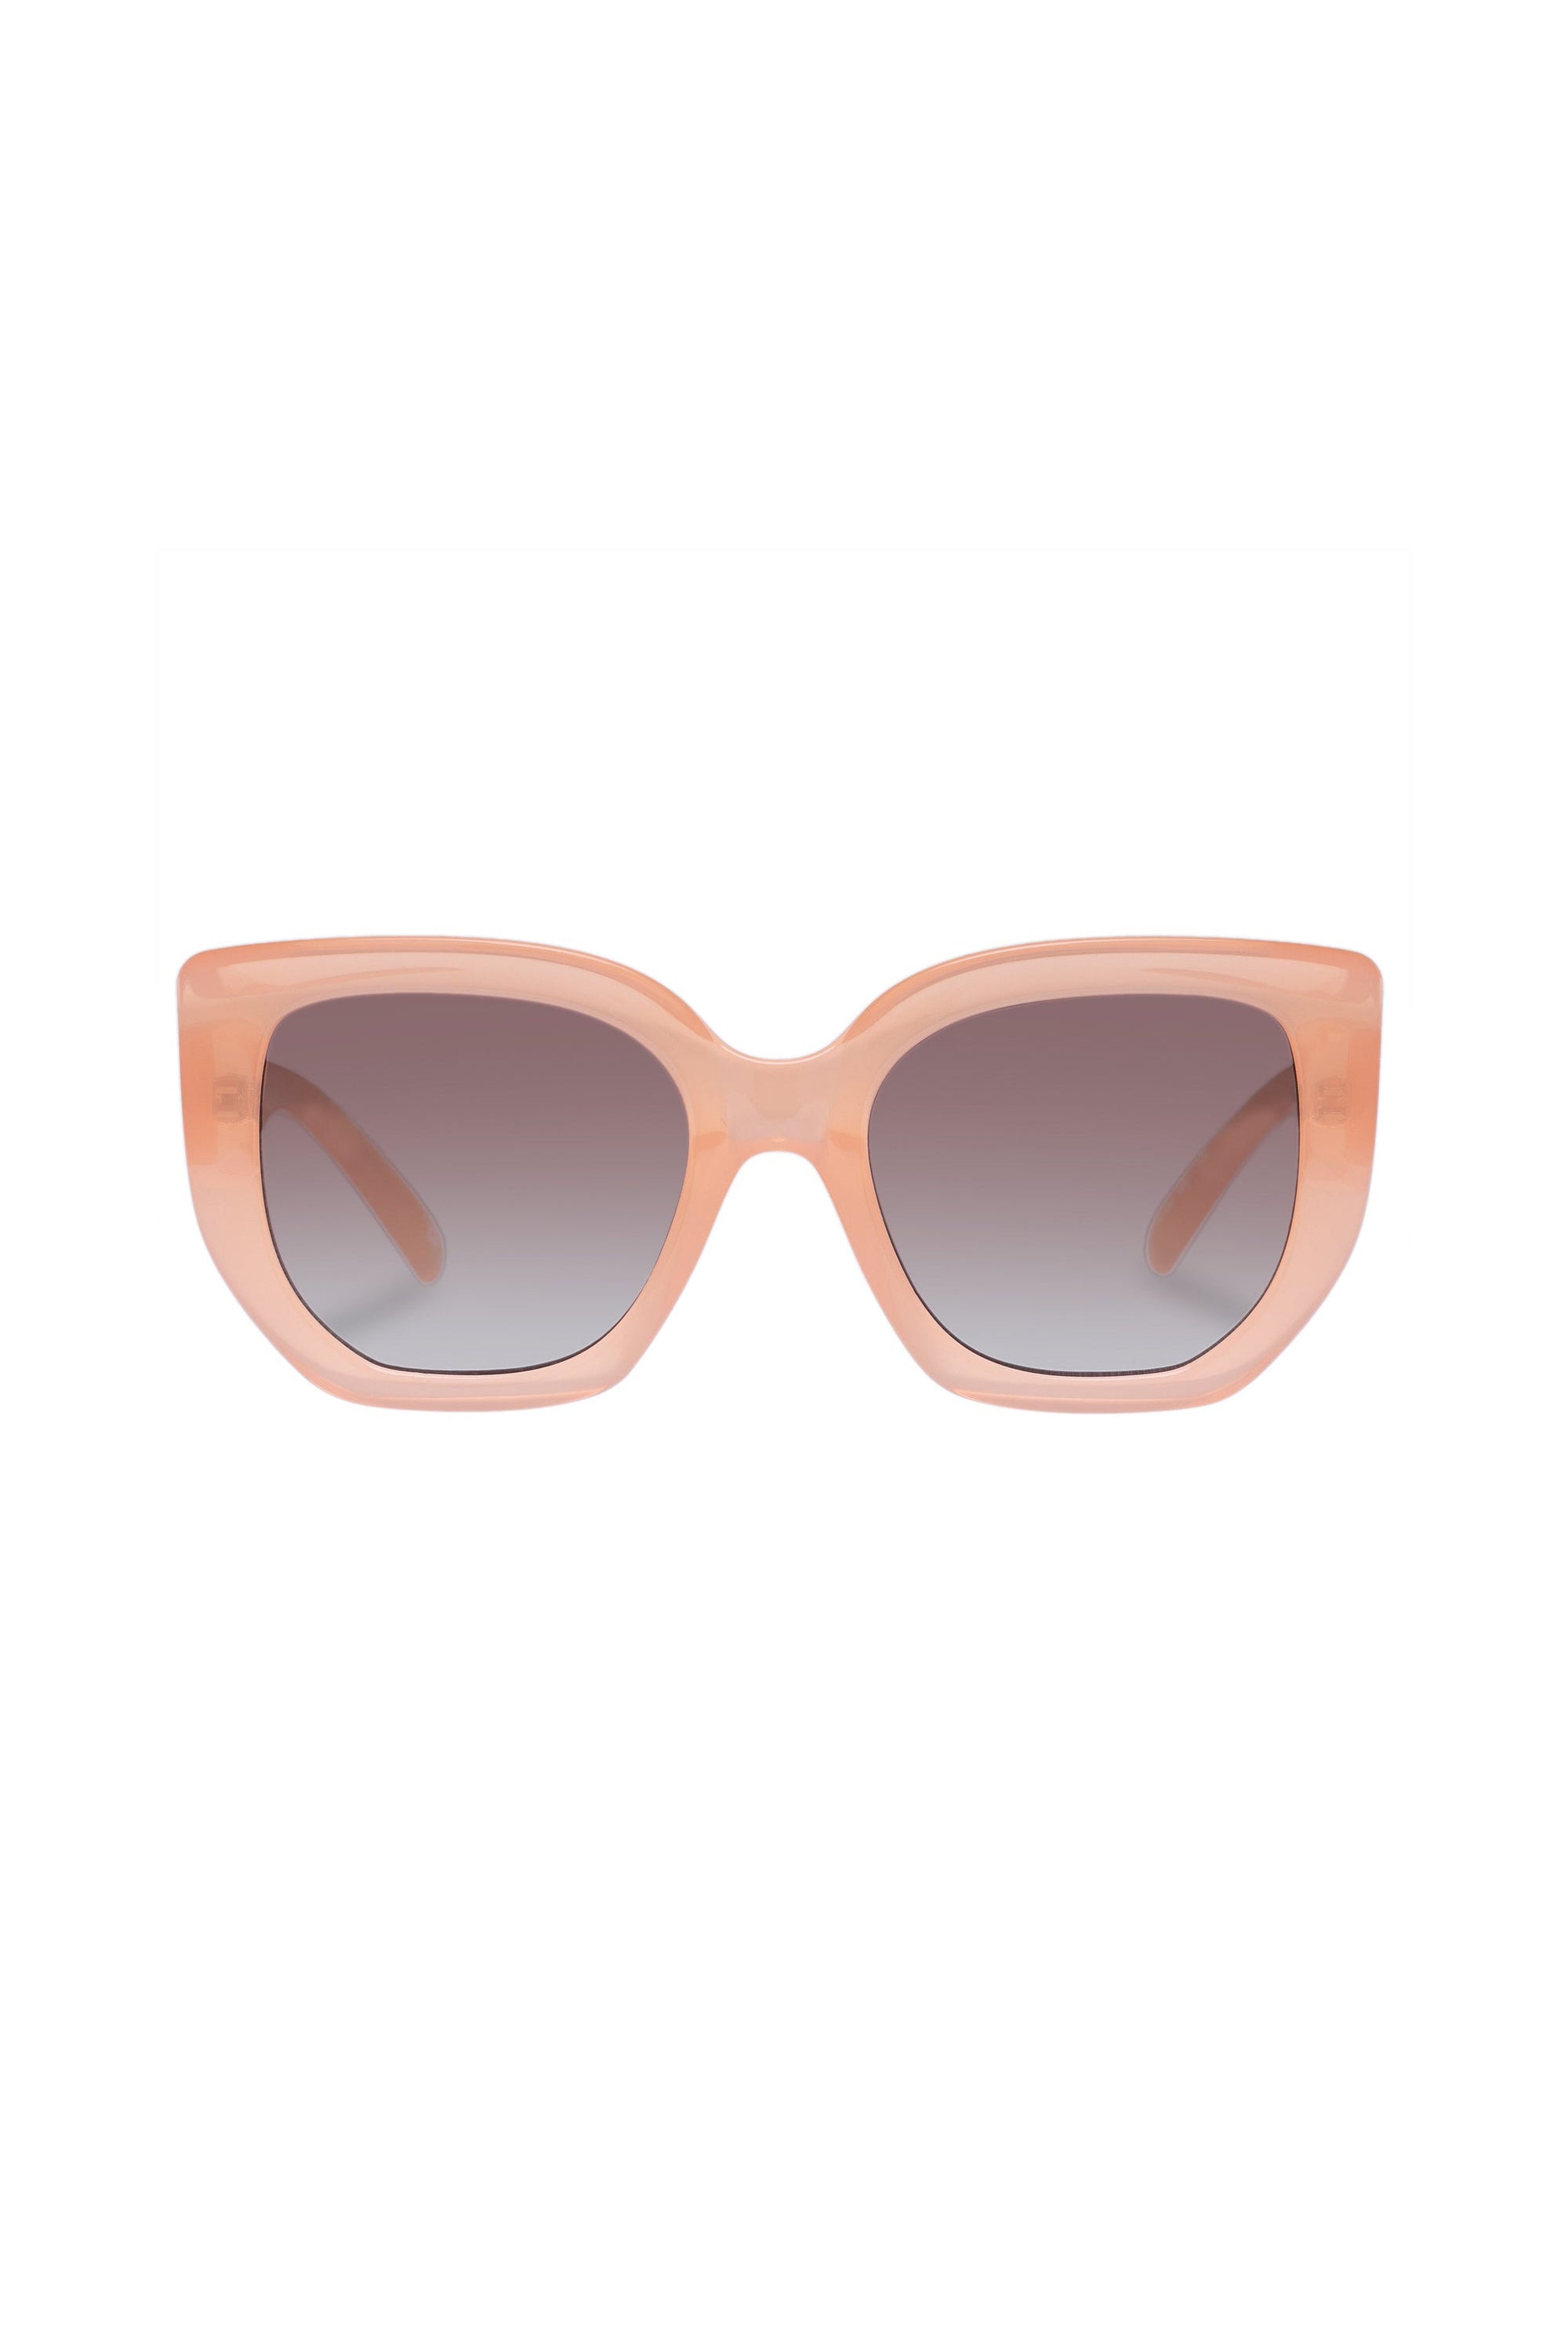 Euphoria Sunglasses - Mimosa Pink